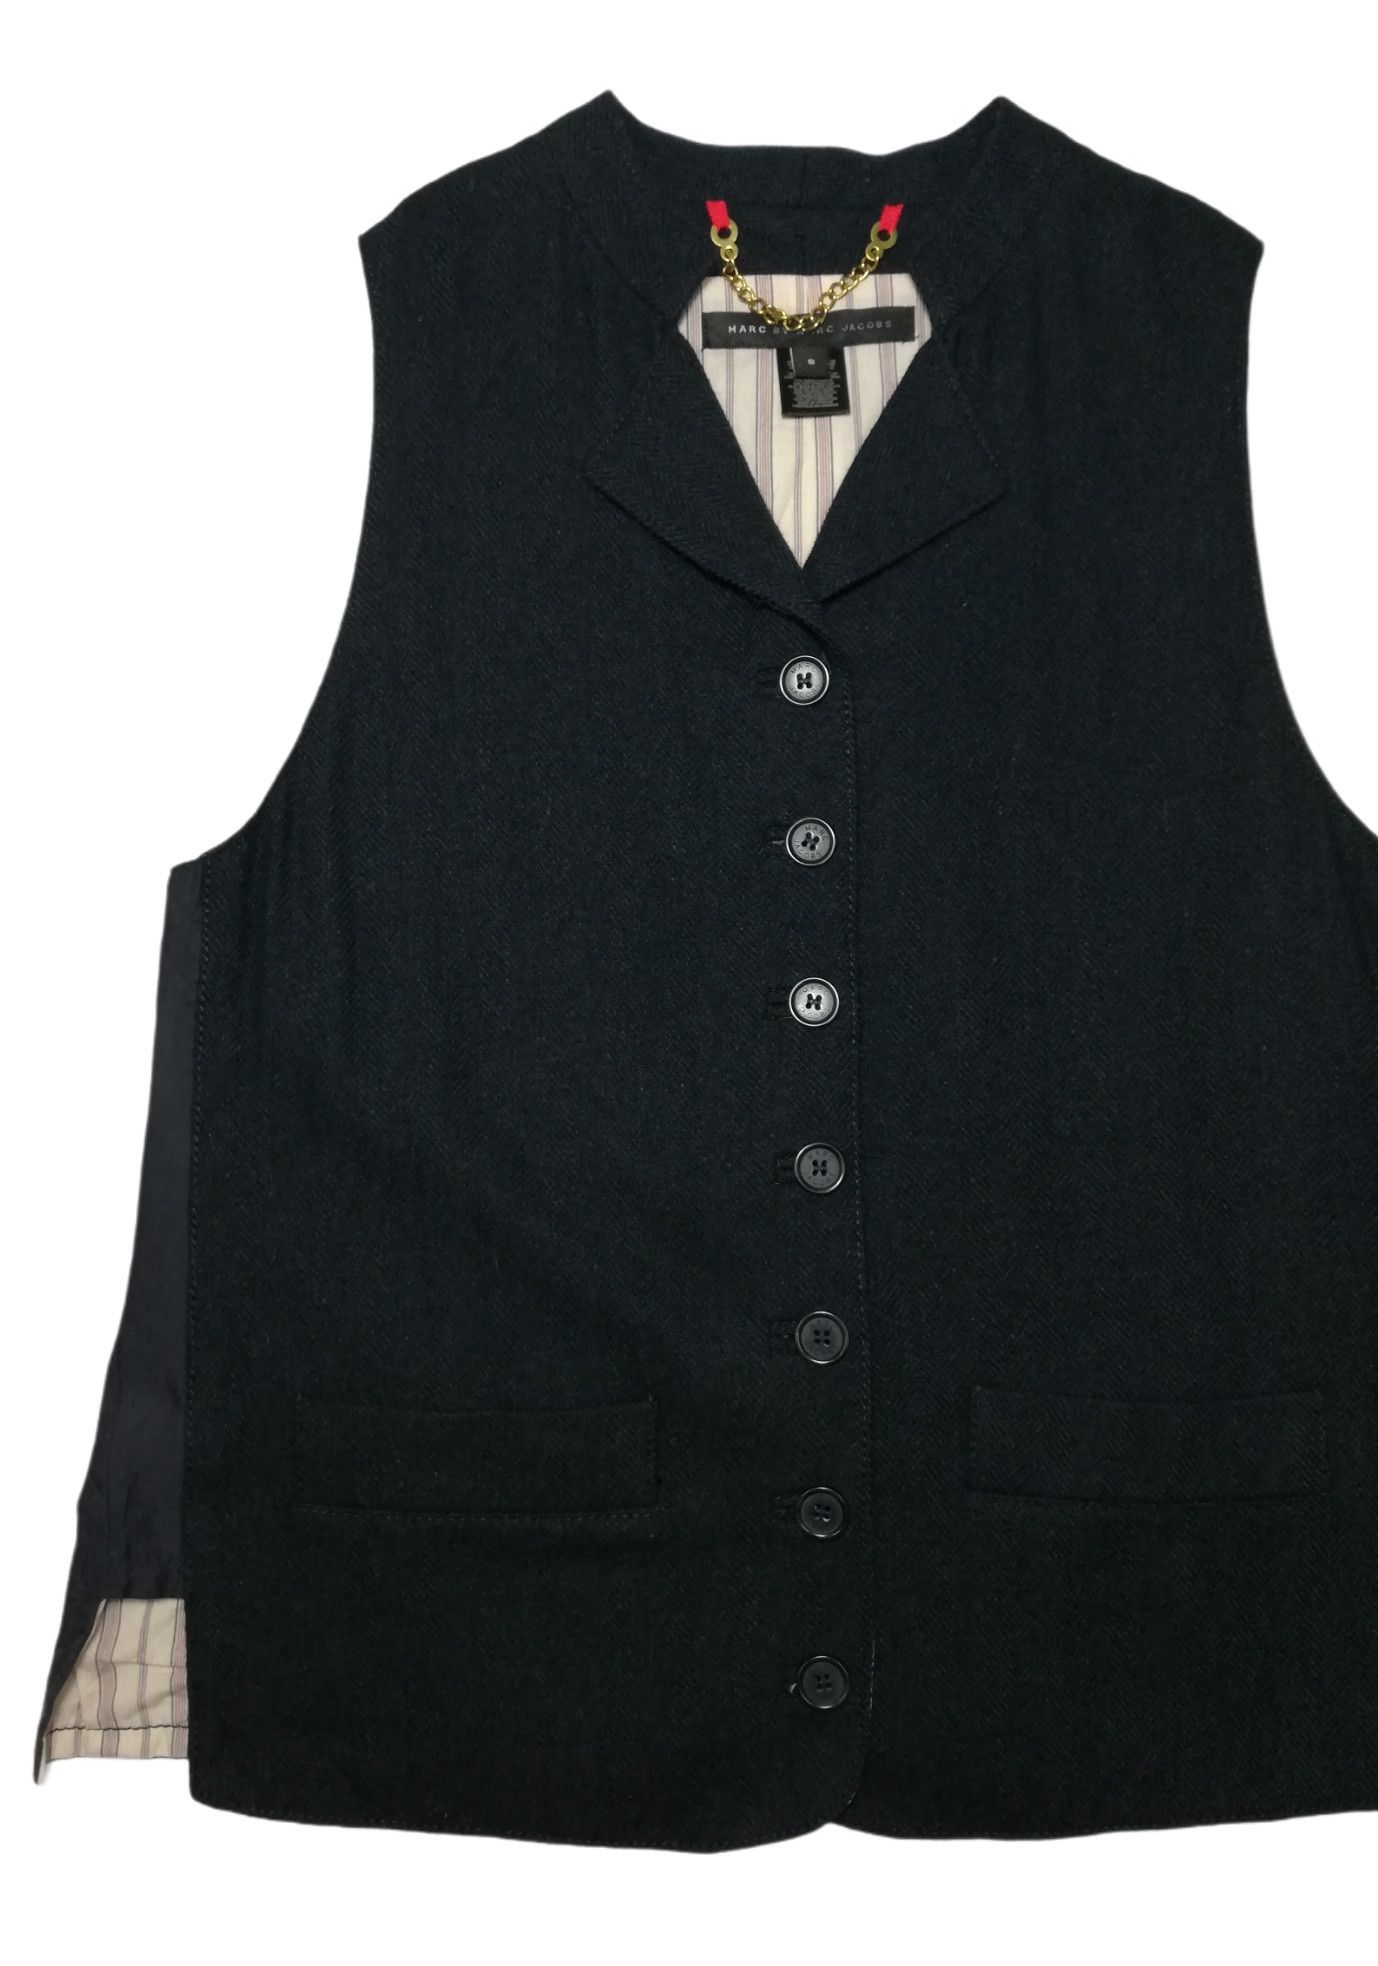 Marc Jacobs 🔥DOPE RARE Marc Jacobs Wool Herringbone Lined Stripe Vest Size US S / EU 44-46 / 1 - 3 Thumbnail